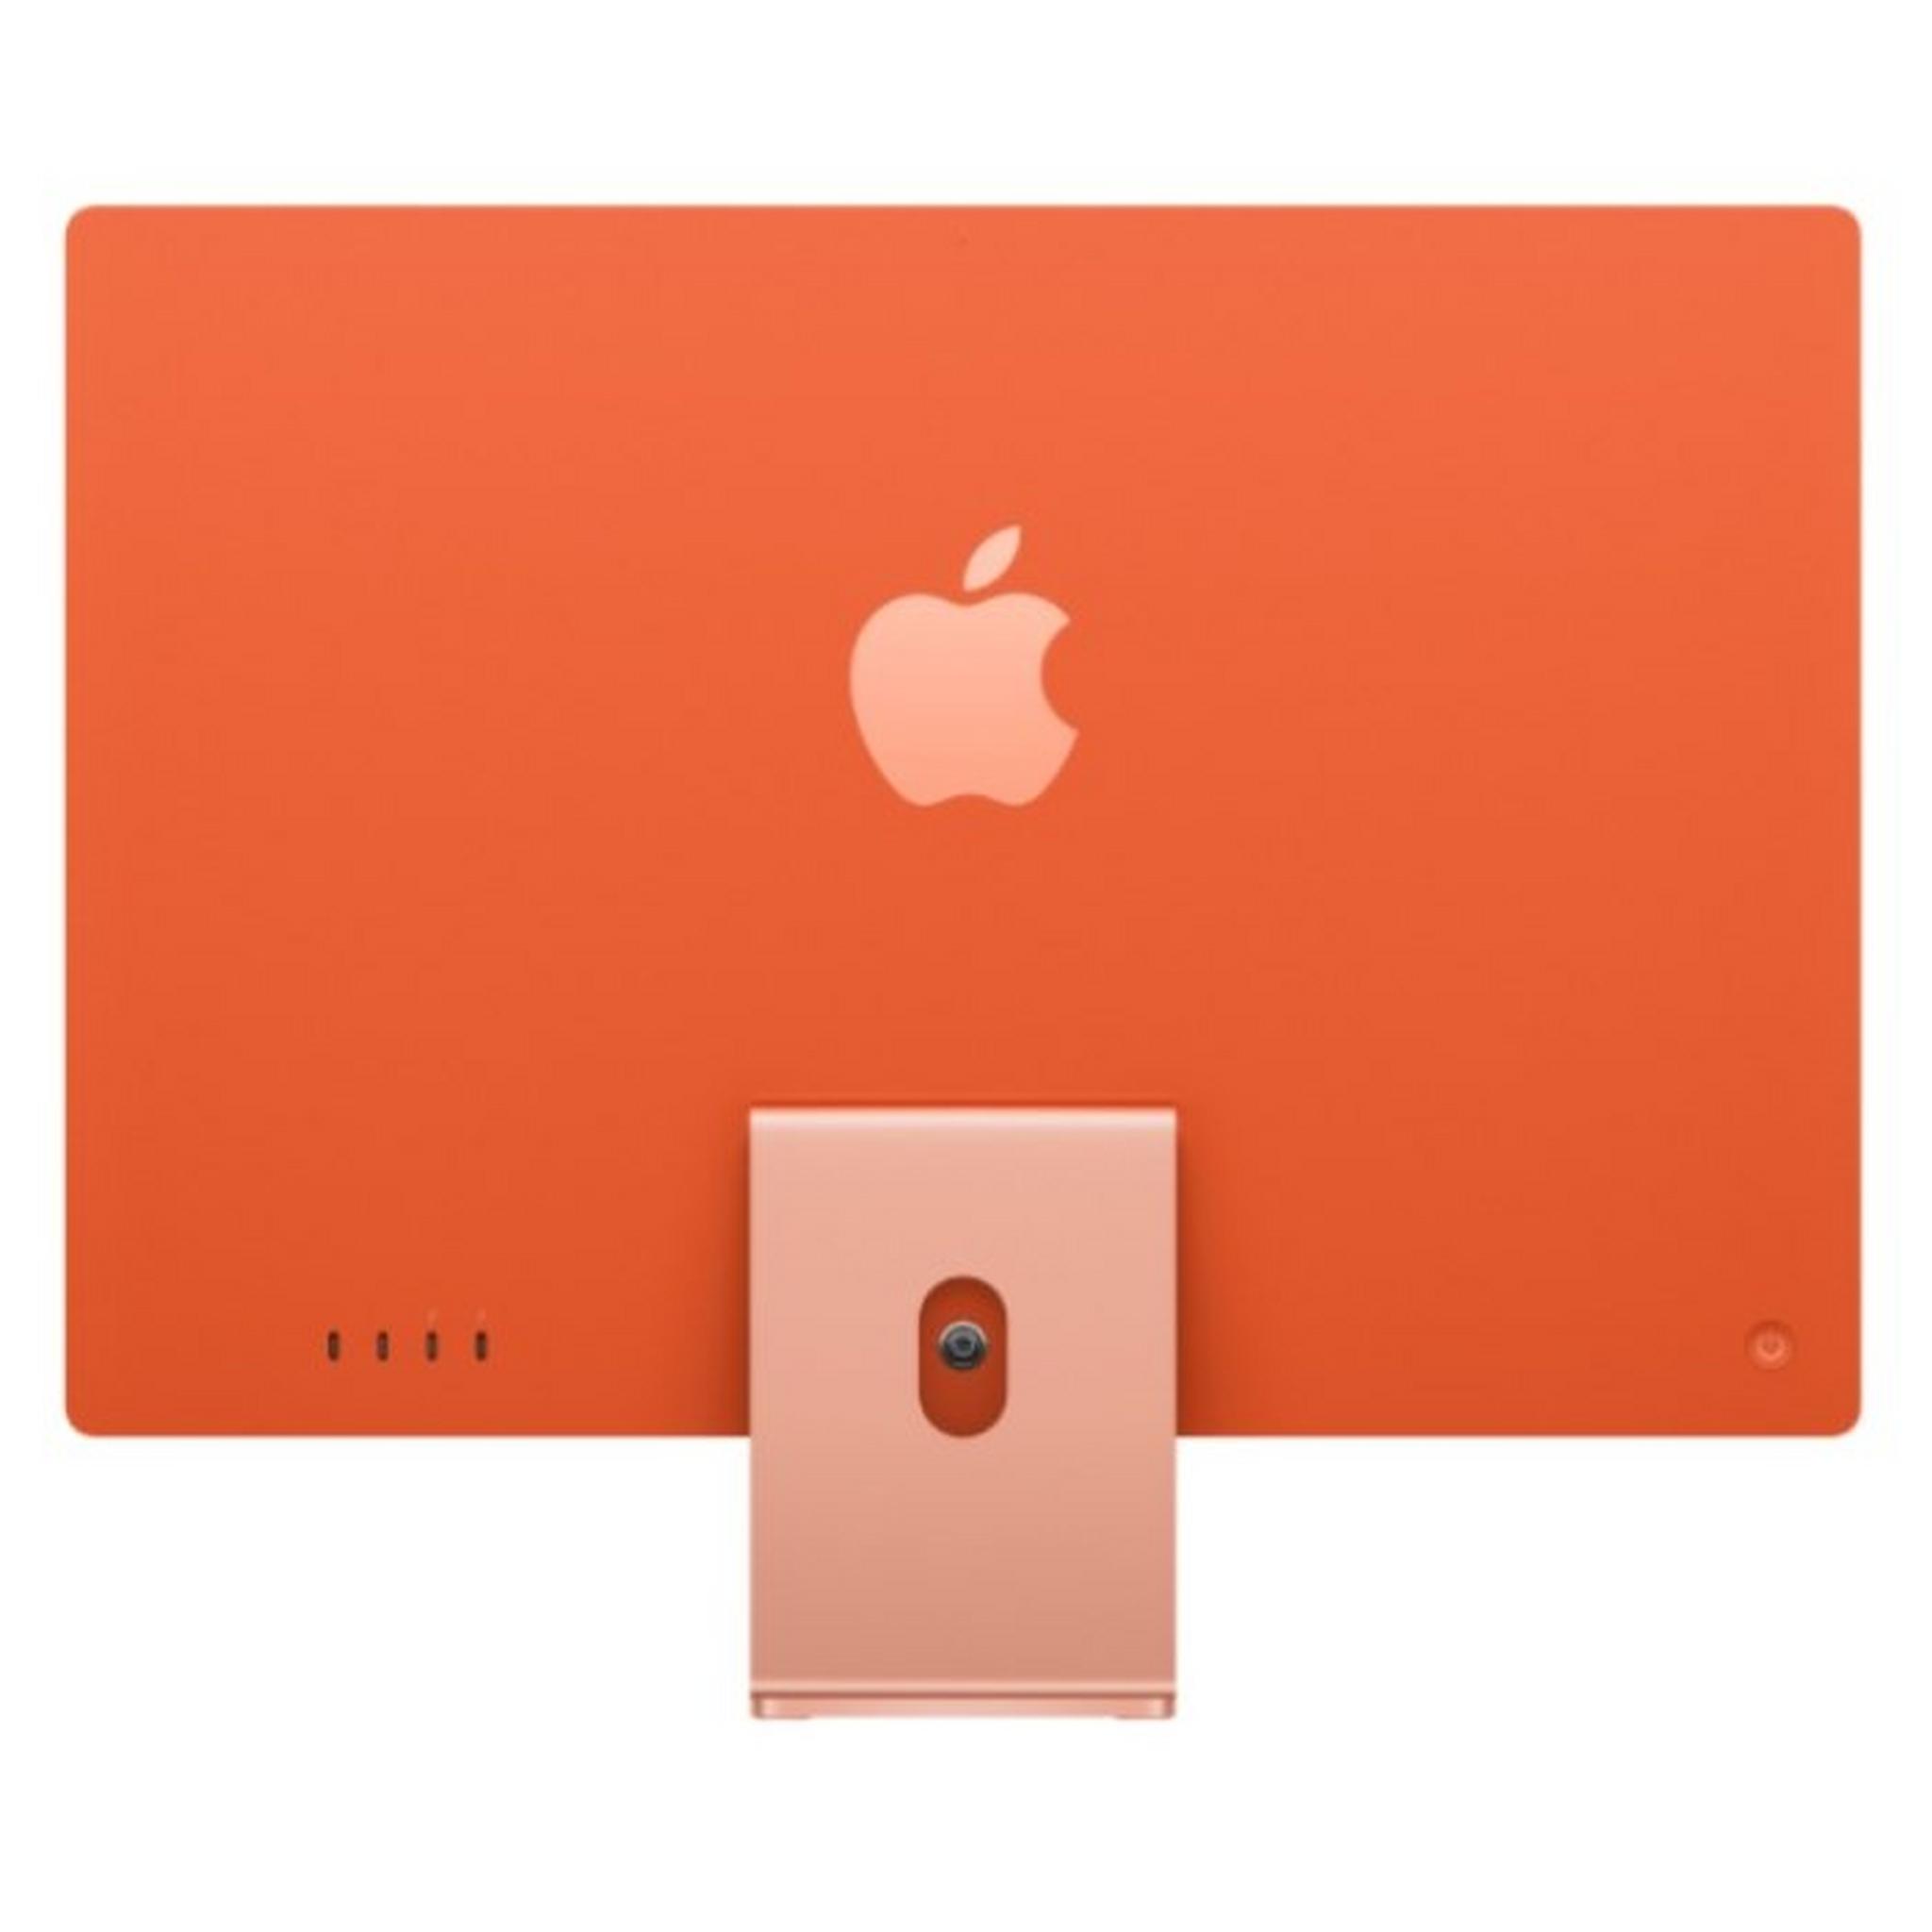 Apple iMac M1, RAM 8GB, 512GB SSD, 24" 4.5K Retina All in one Desktop - Orange